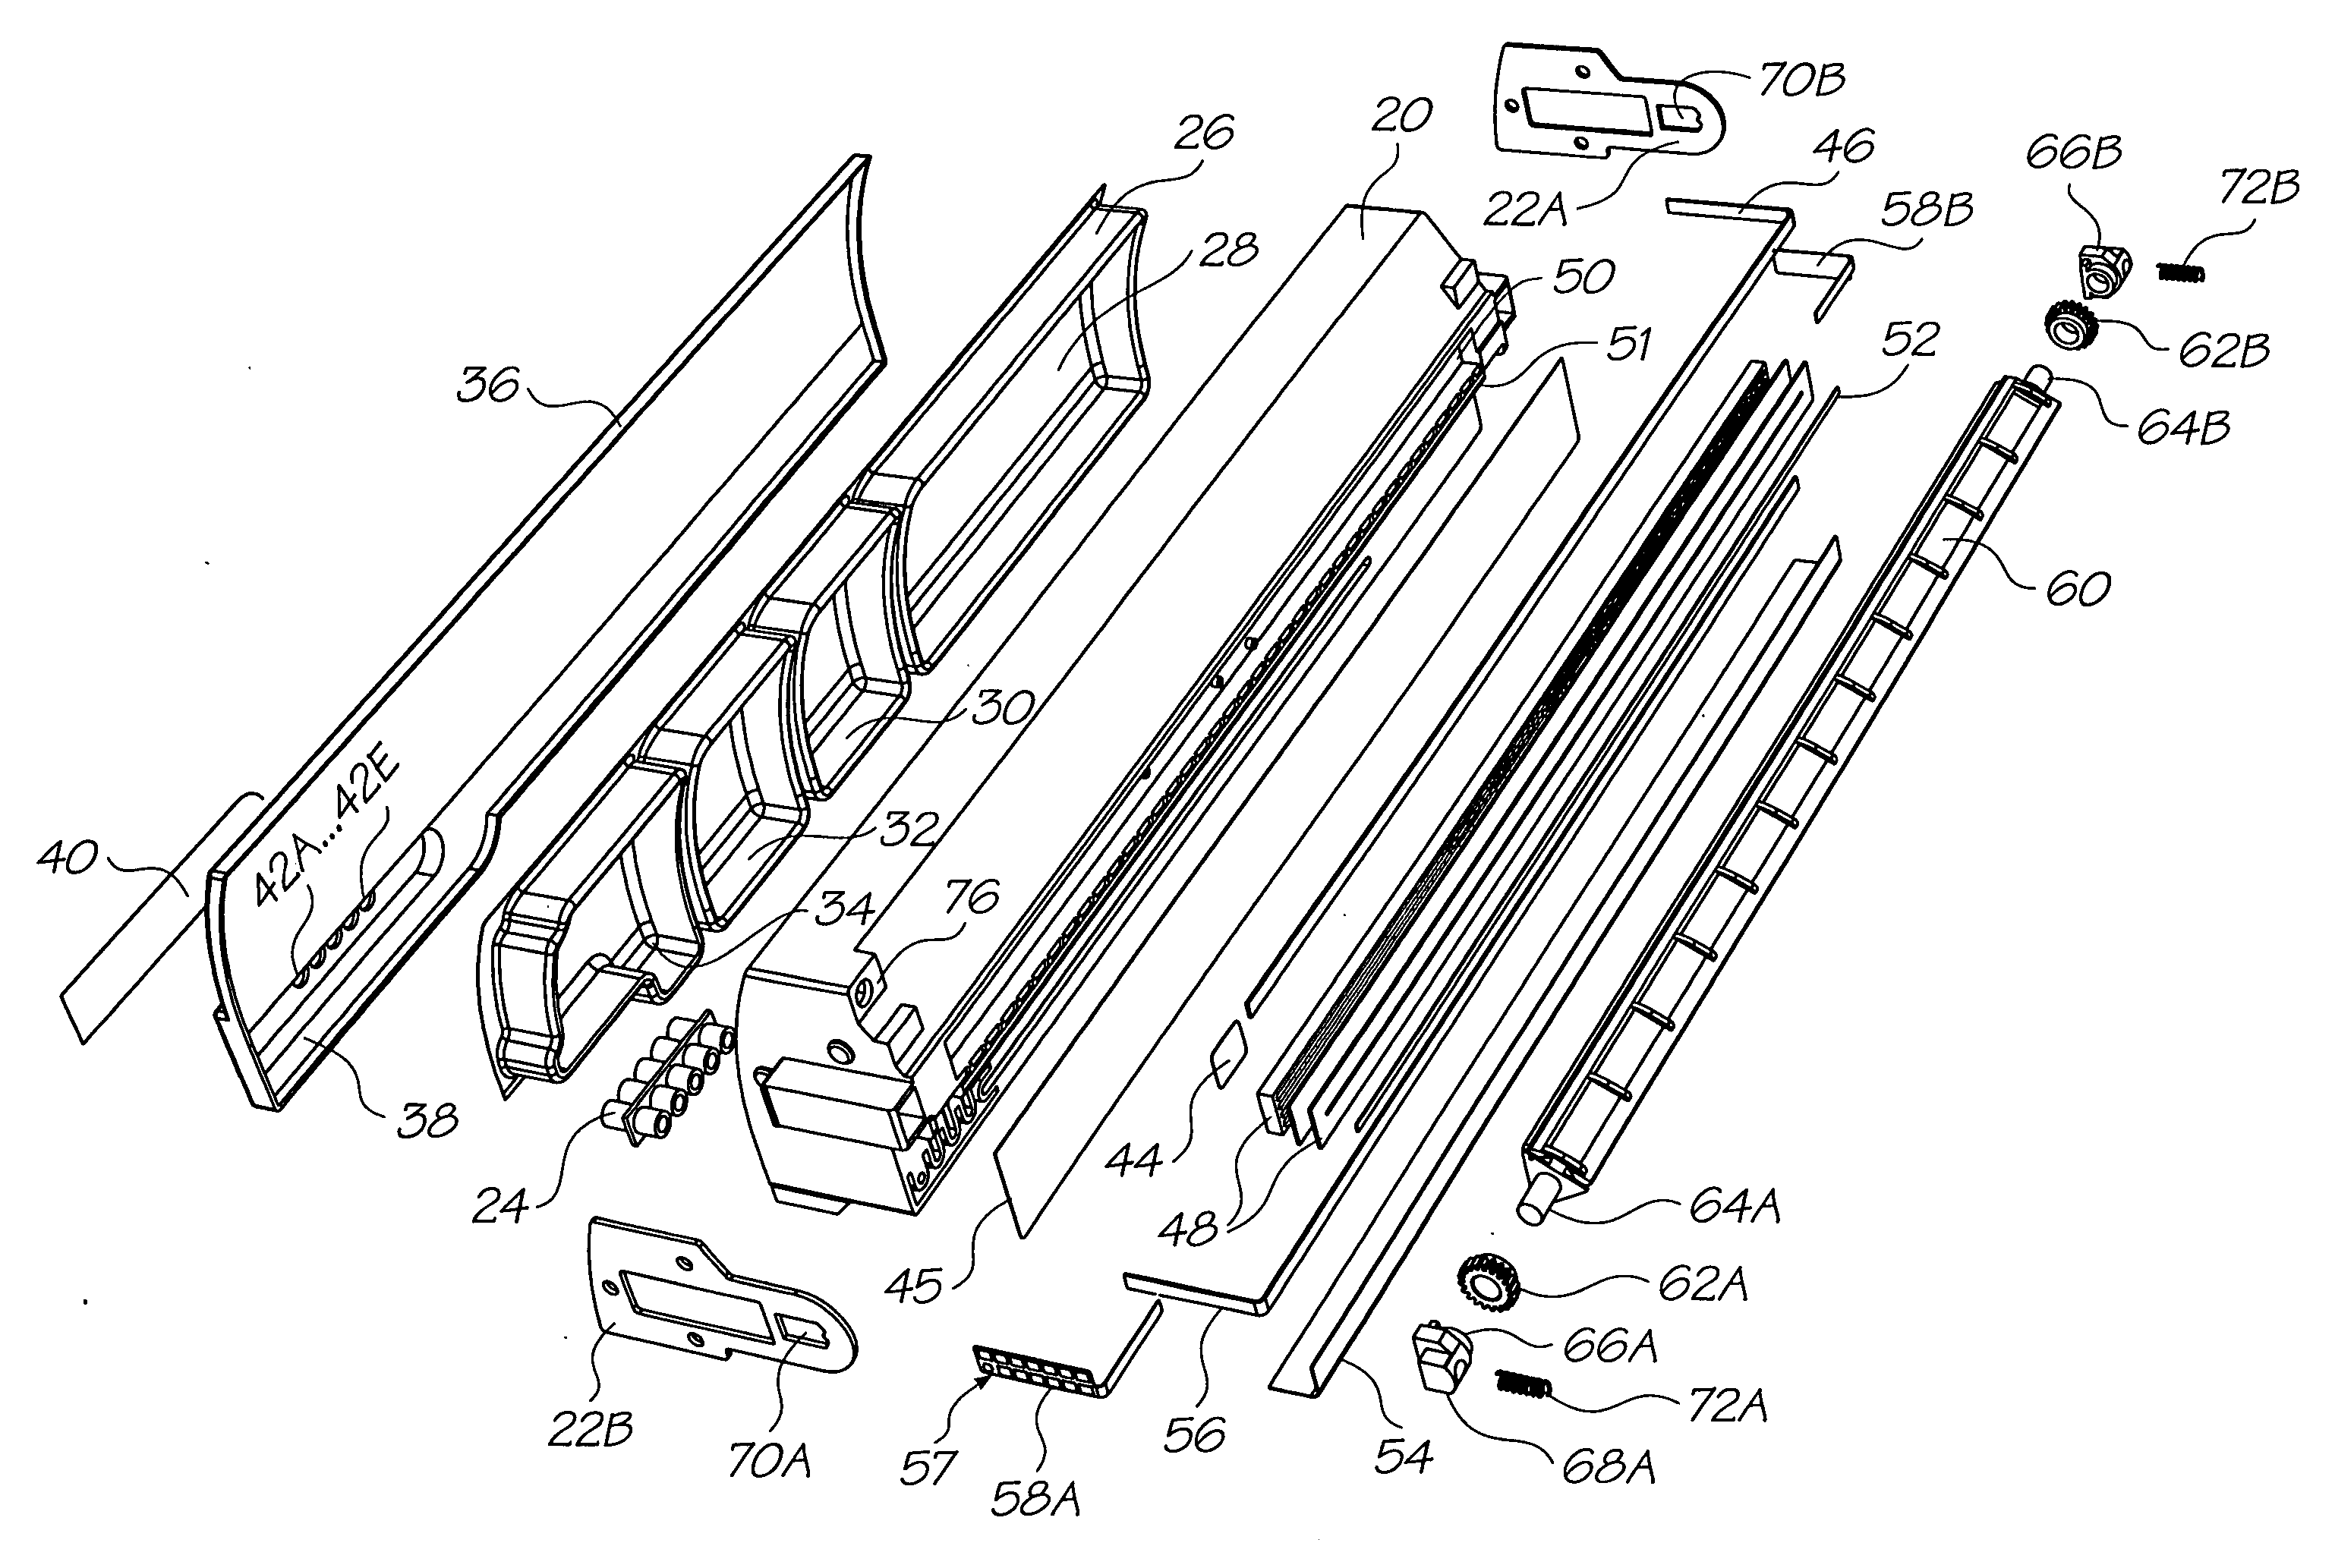 Inkjet printer cradle with cartridge stabilising mechanism